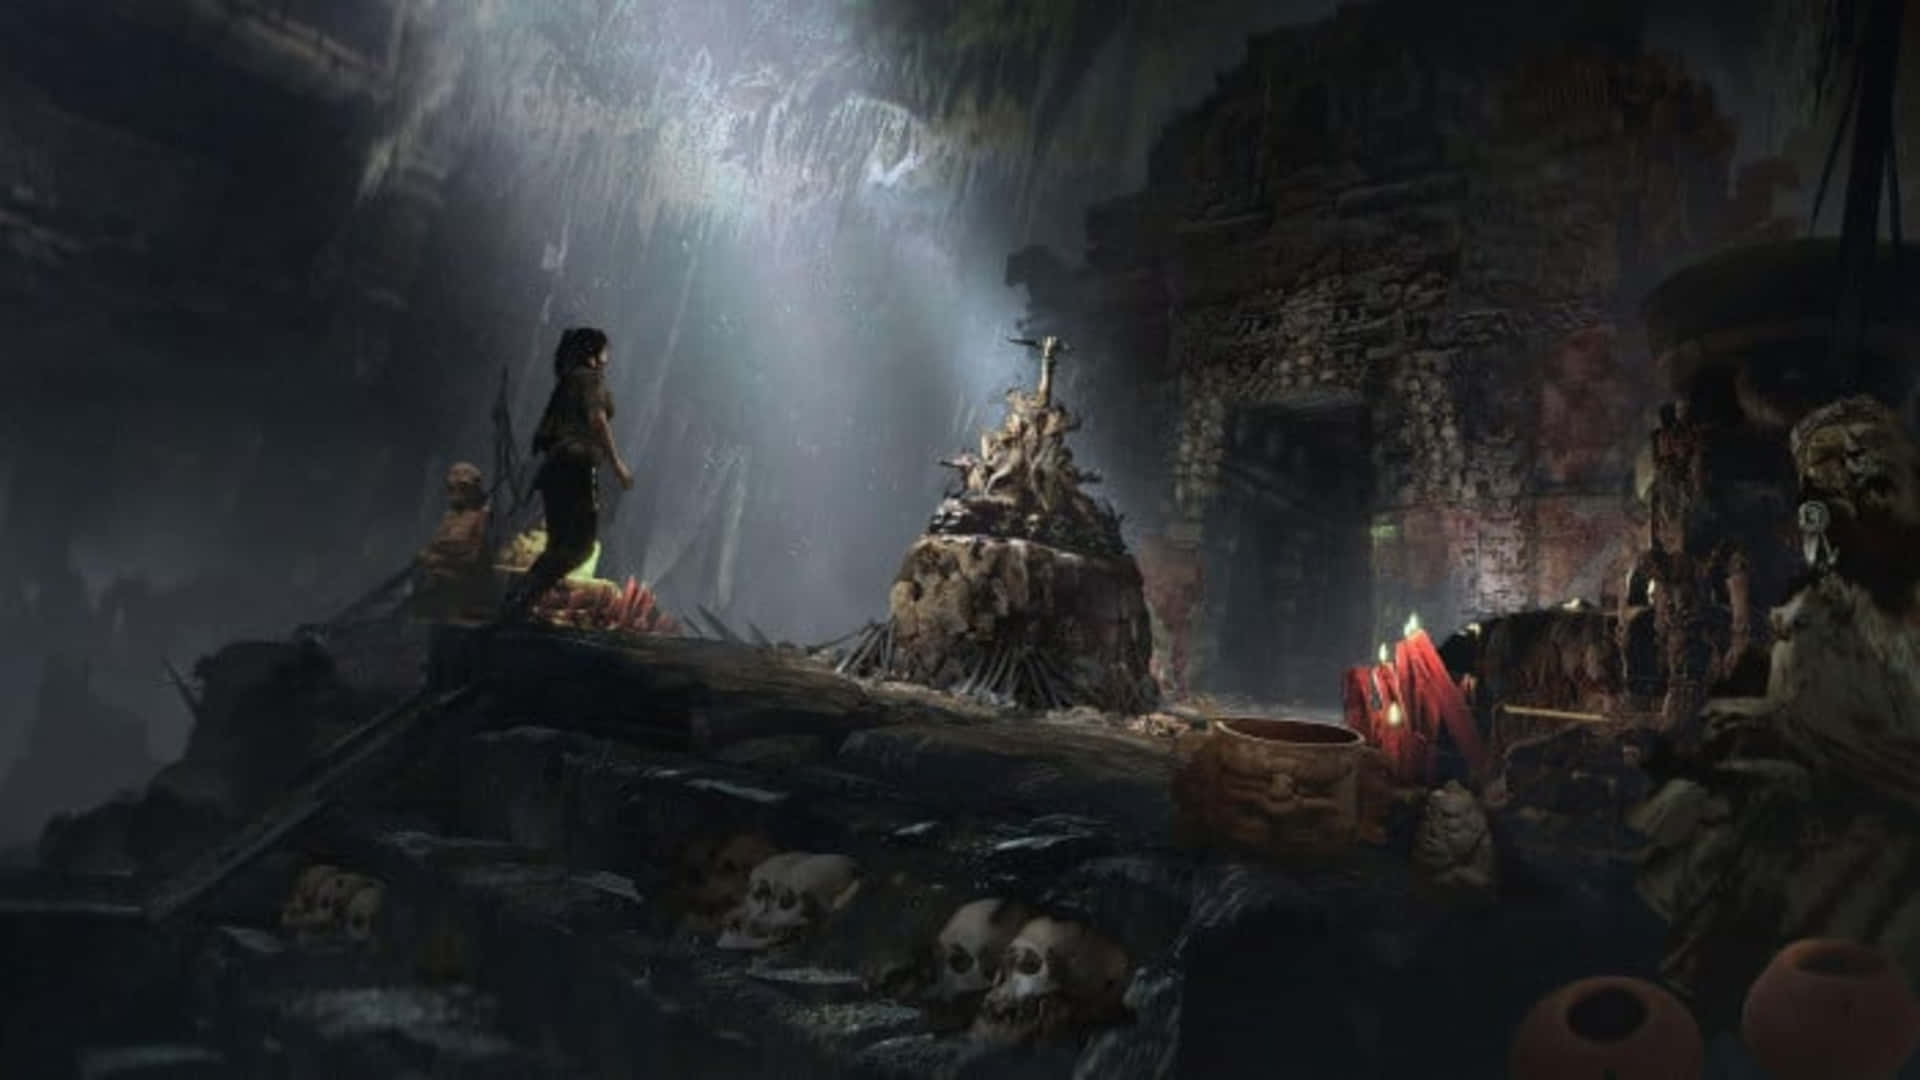 Immergitinell'avventura Ricca Di Azione Di Lara Croft In Shadow Of The Tomb Raider.